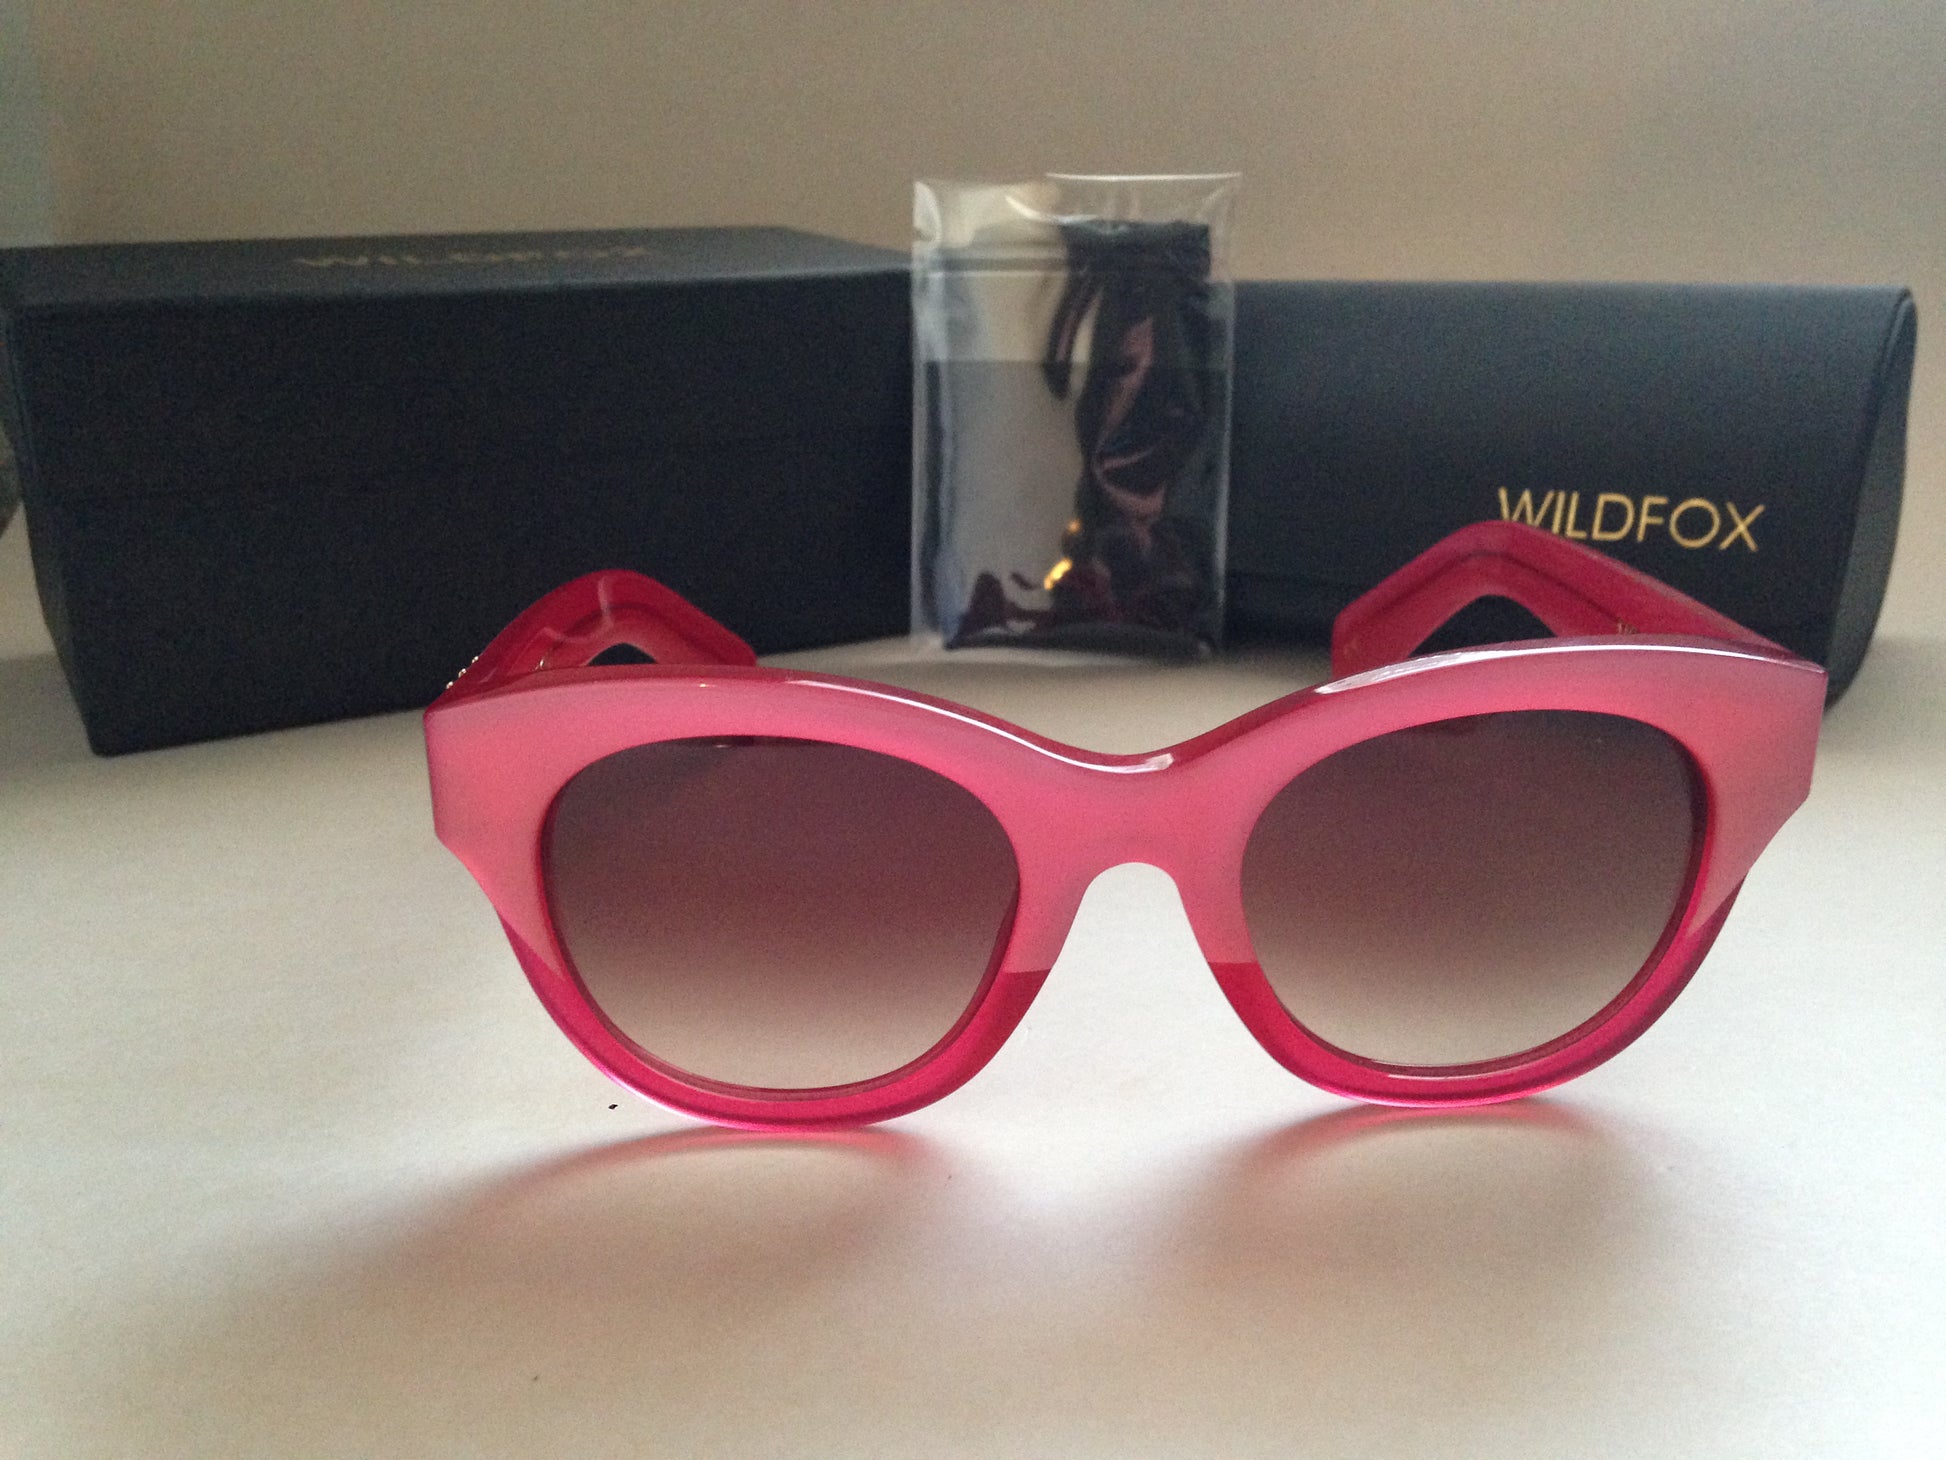 Wildfox Monroe Celebrity Style Sunglasses Quartz Red Pink Frame Brown Gradient Lens - Sunglasses